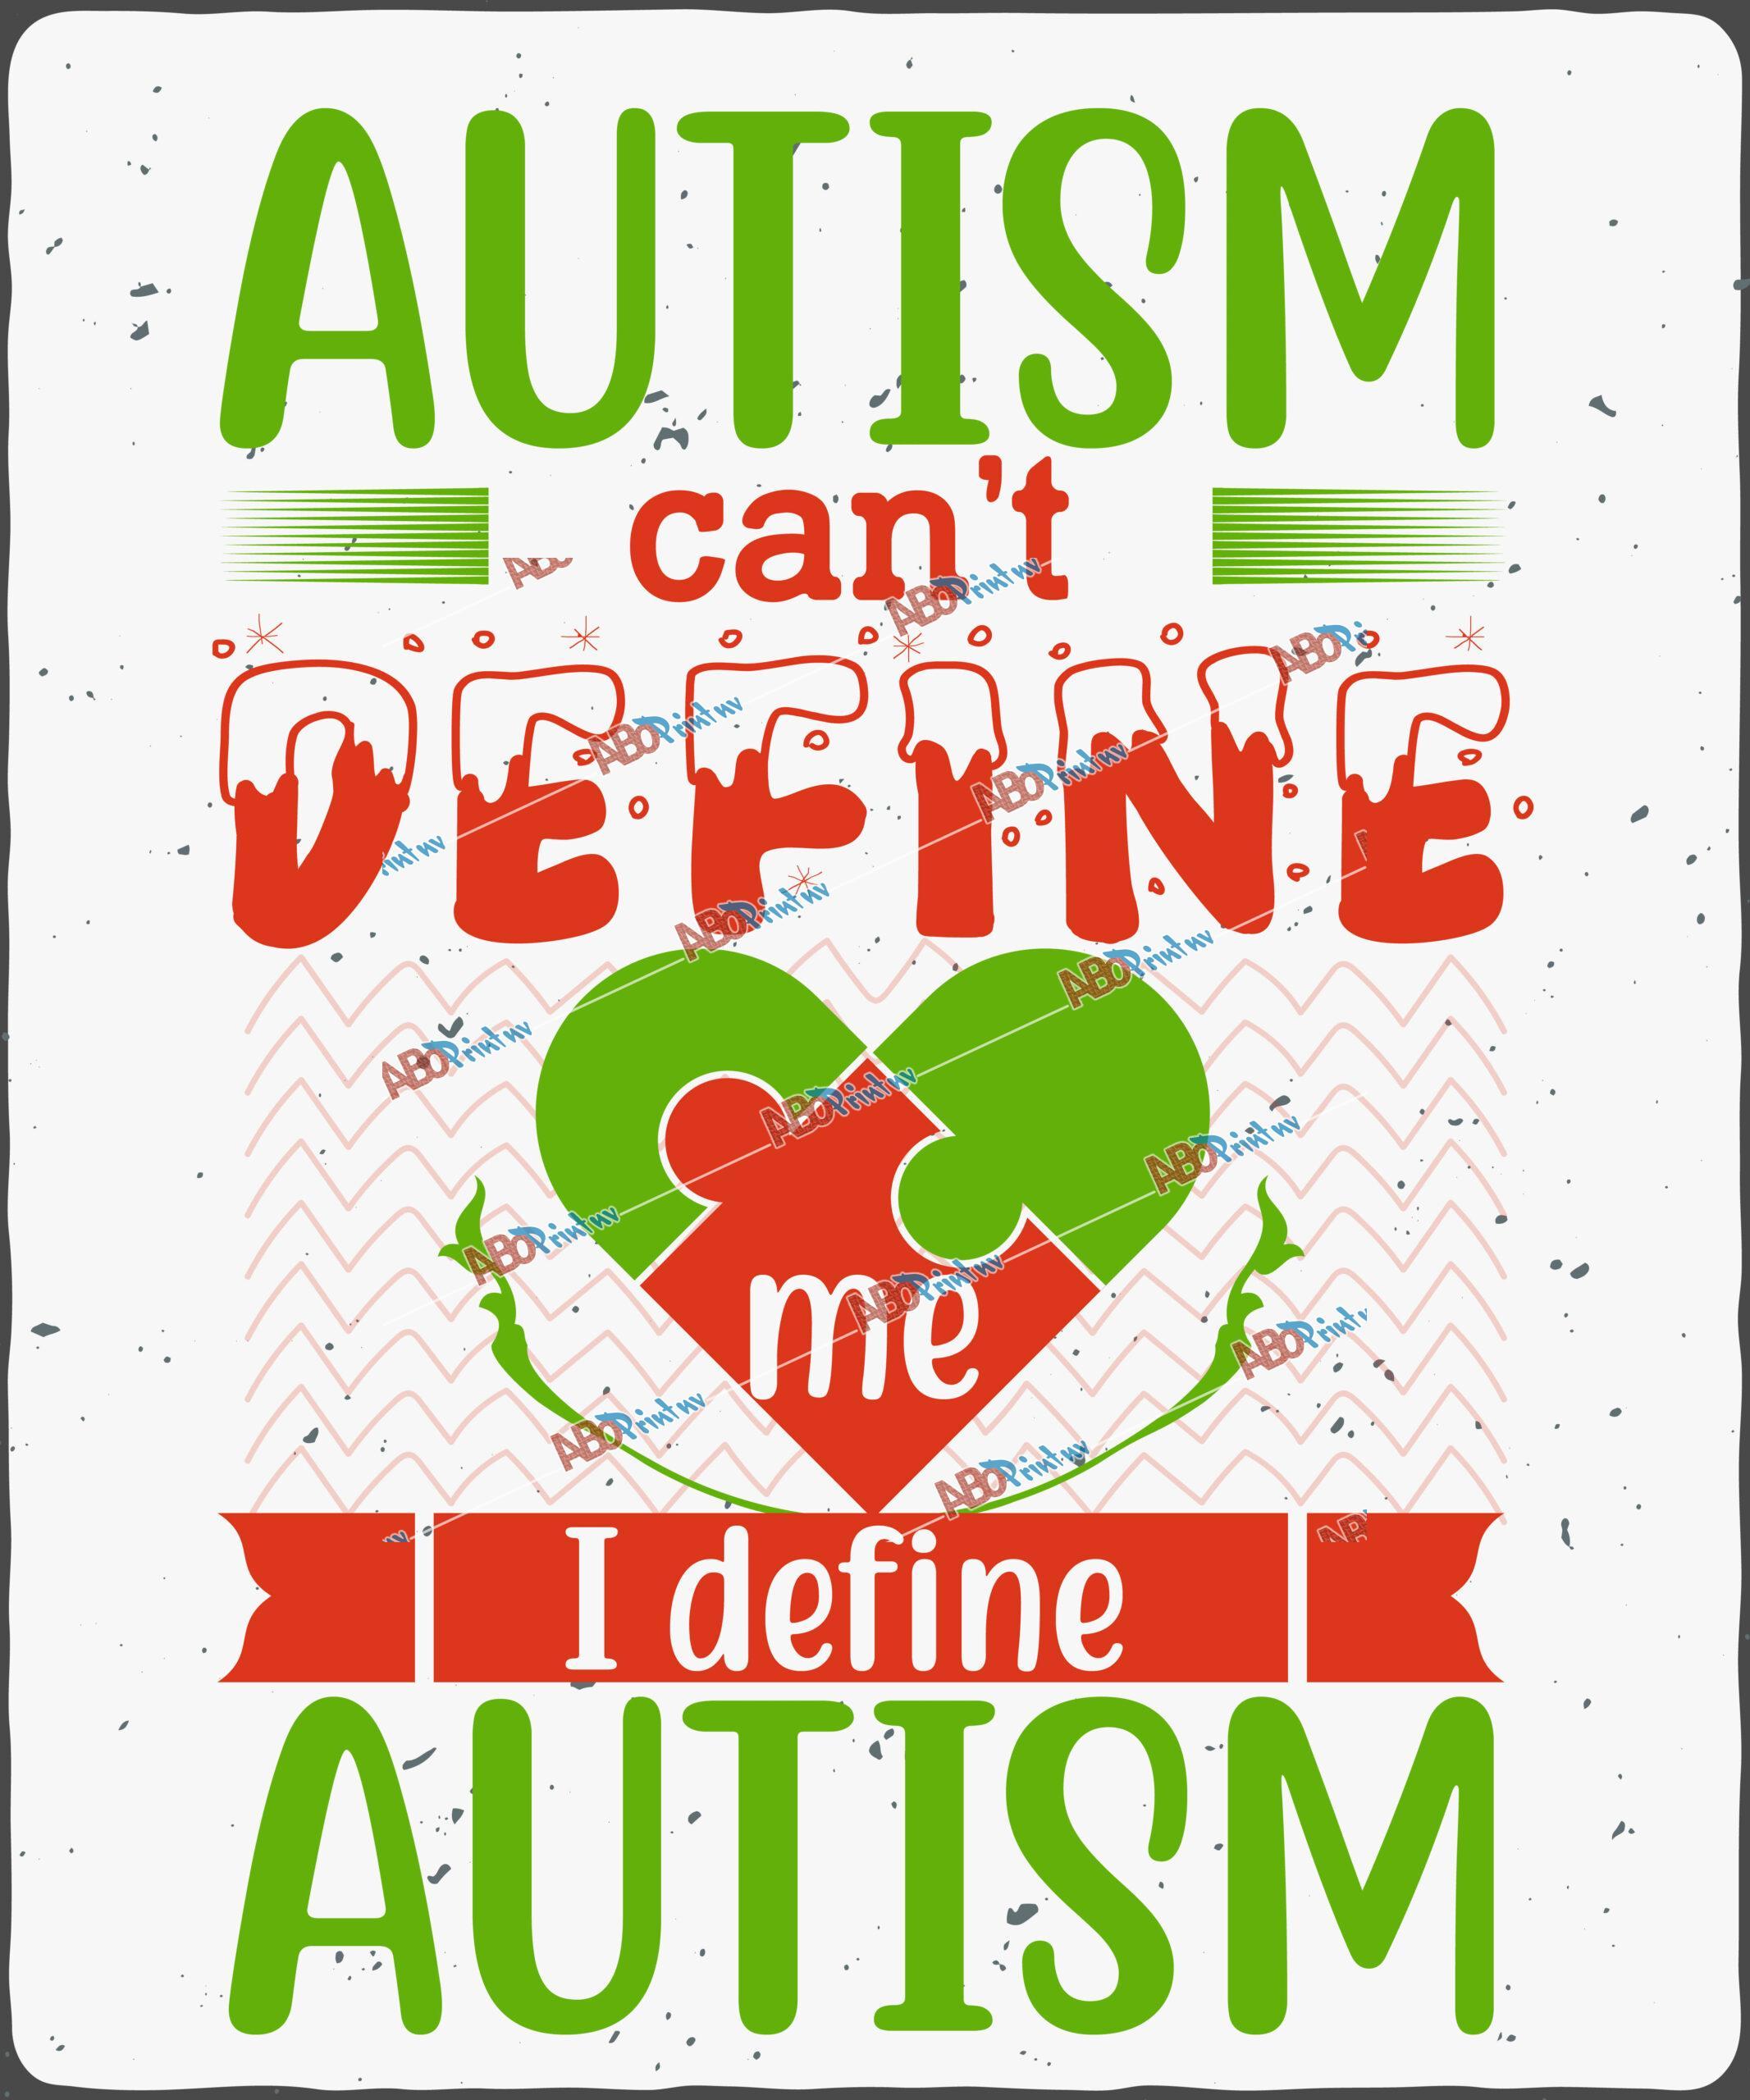 Autism can’t define me. I define autism